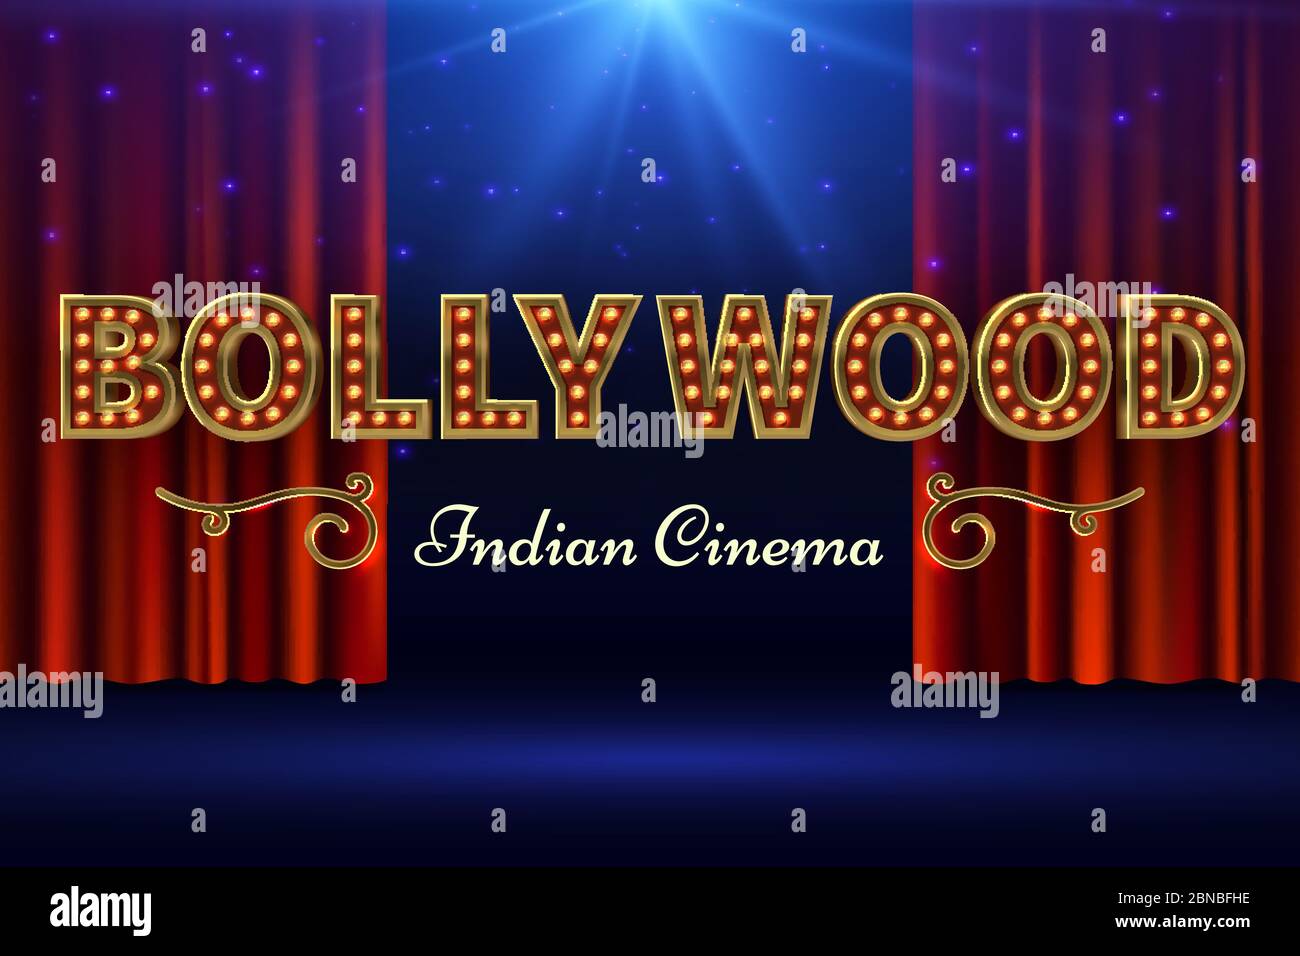 Bollywood indischer Film. Vintage Filmplakat mit alter Bühne und rotem Vorhang. Vektorgrafik. Bollywood Kino Banner, Film-Kinematographie Industrie Stock Vektor